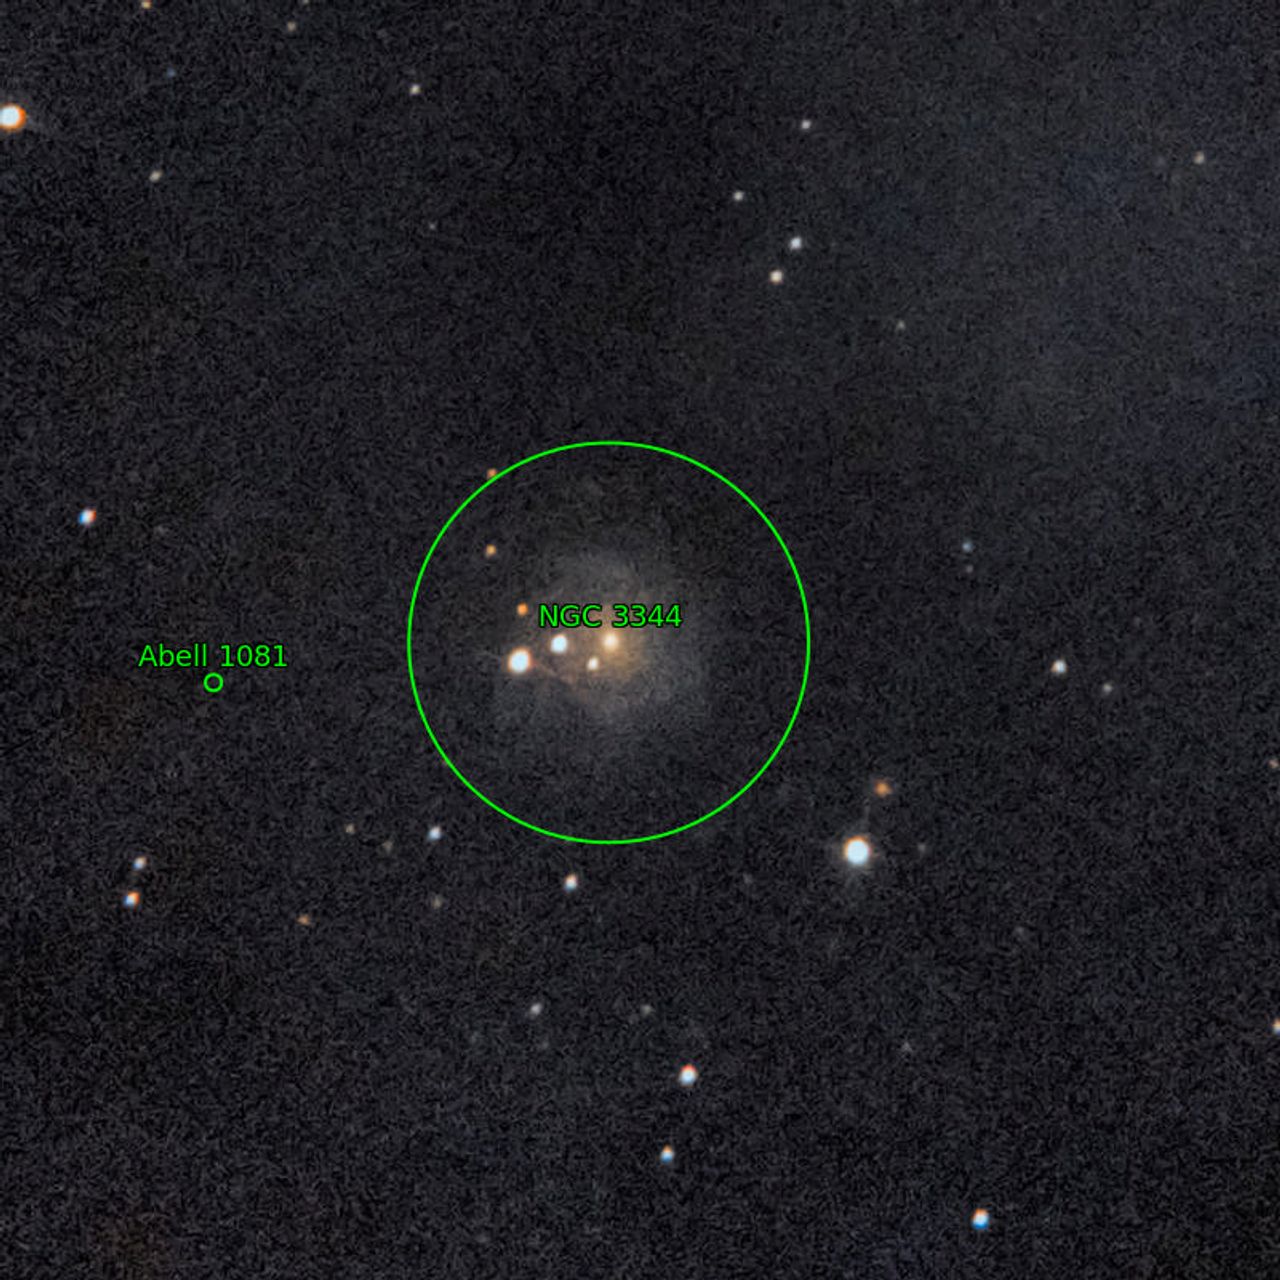 Annotation around NGC3344